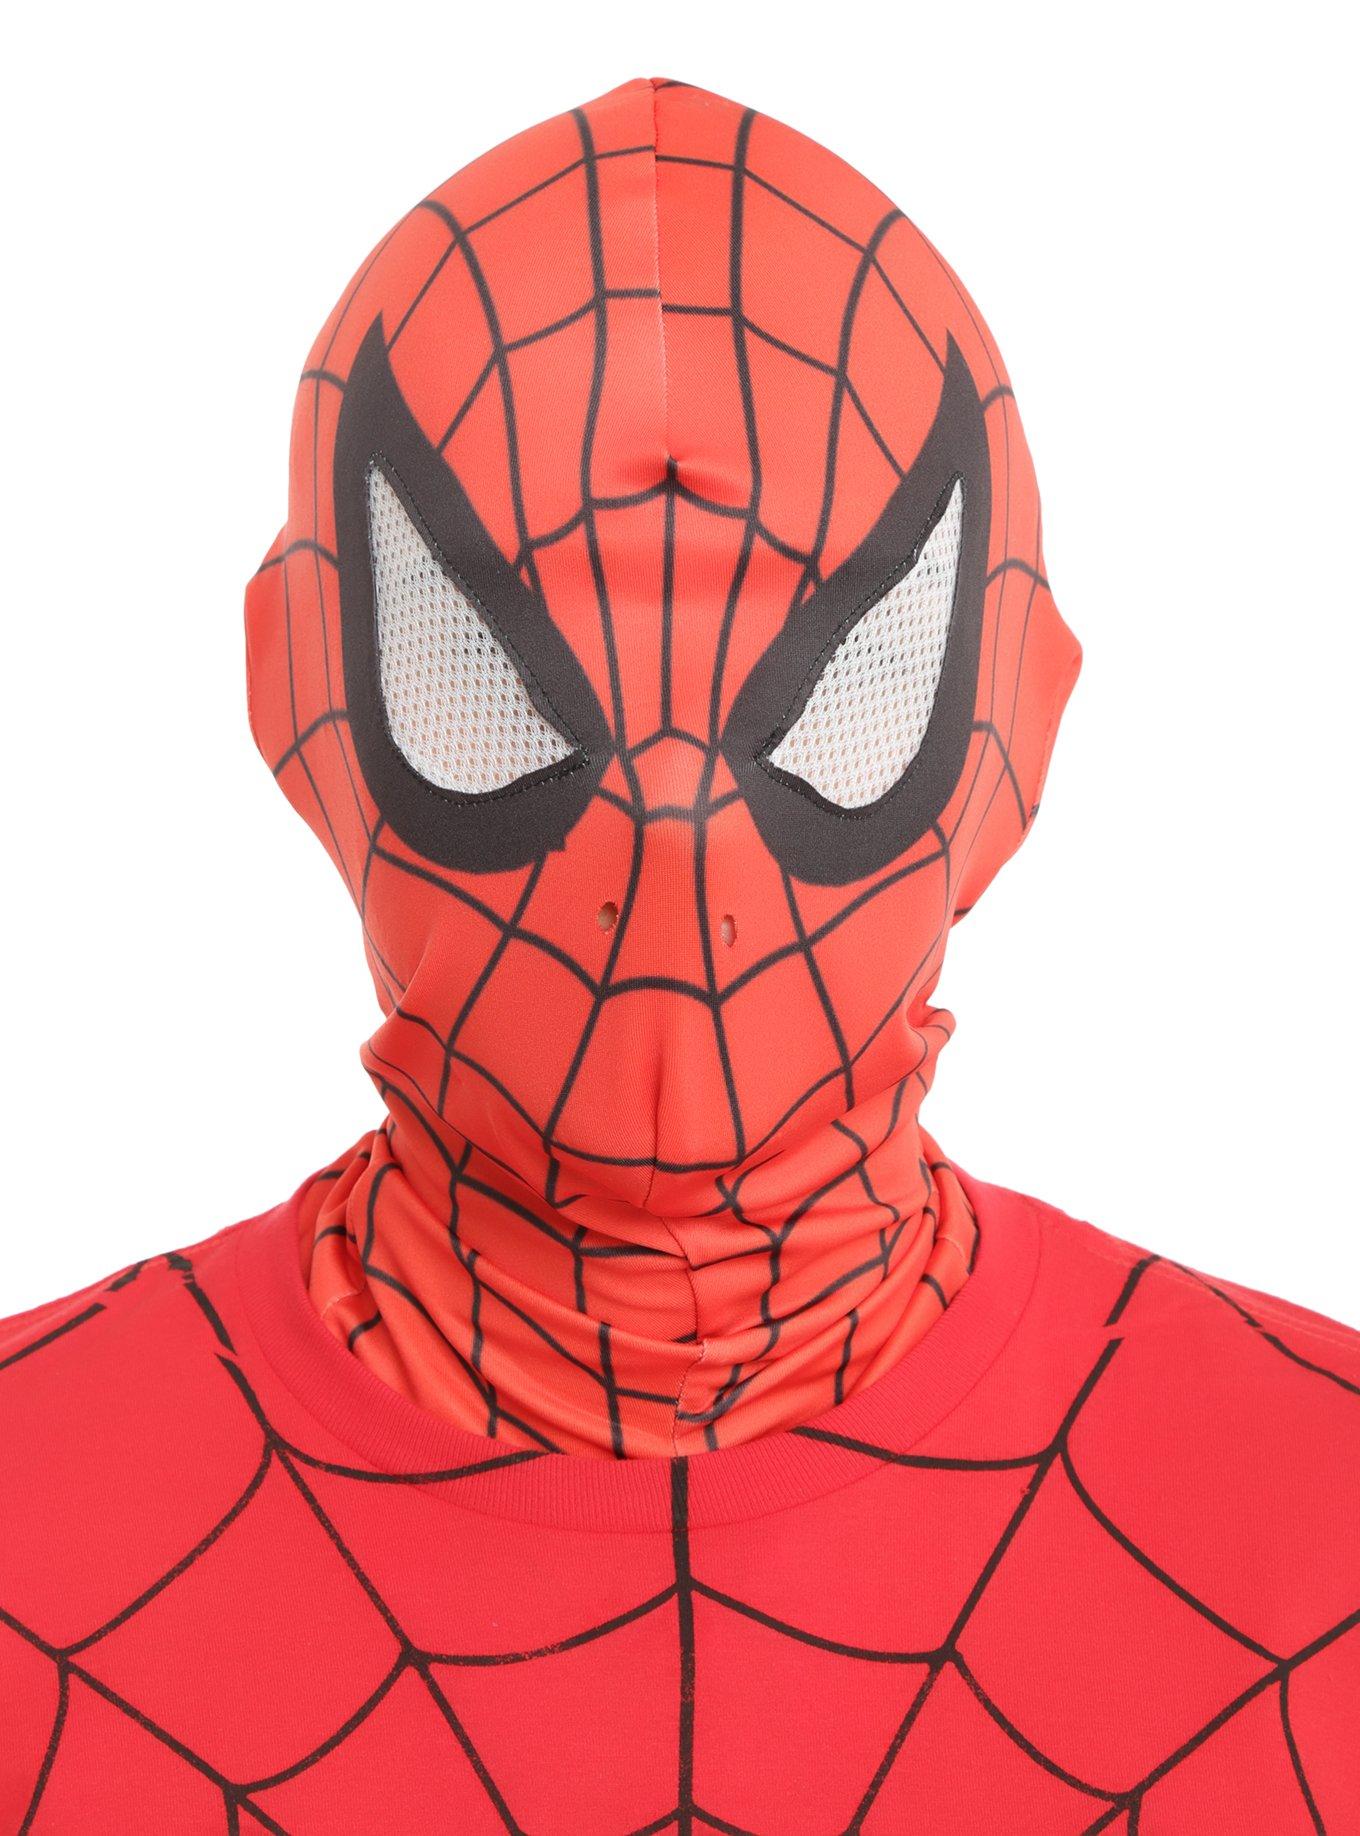 Costume de Spider Man Classic 3-8 ans